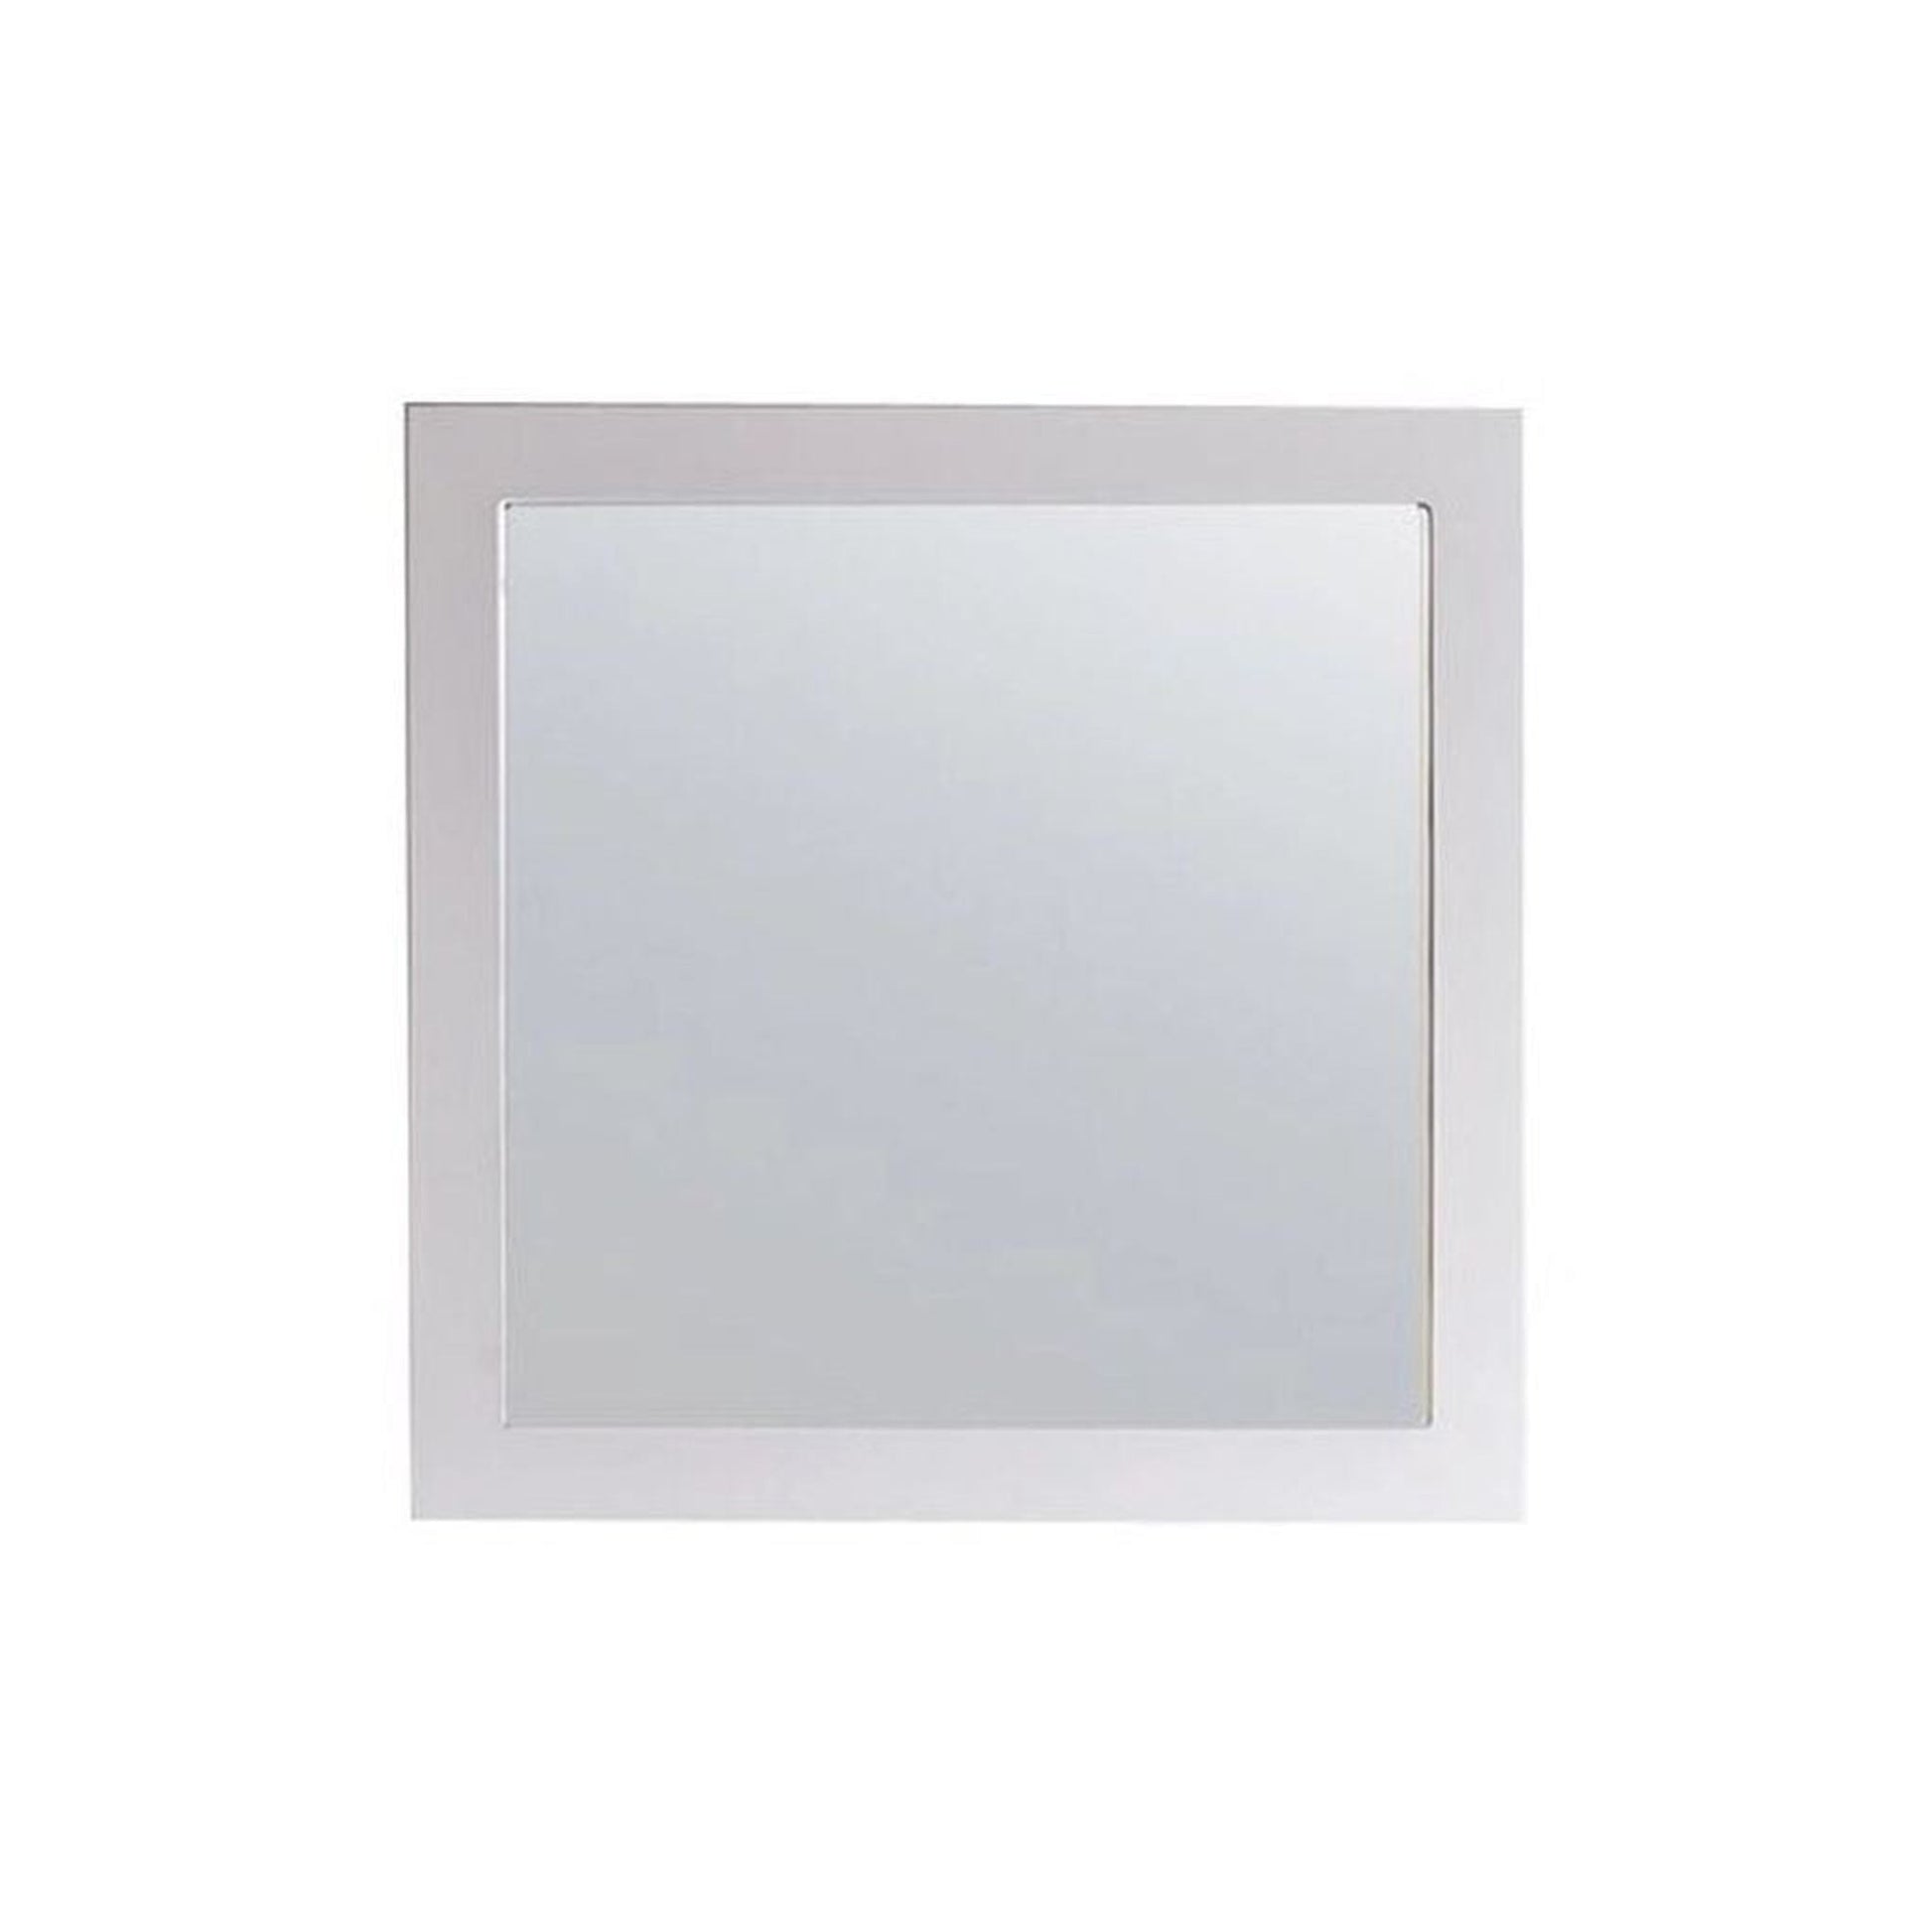 Laviva Nova 28" Square Fully Framed Mirror in White Finish